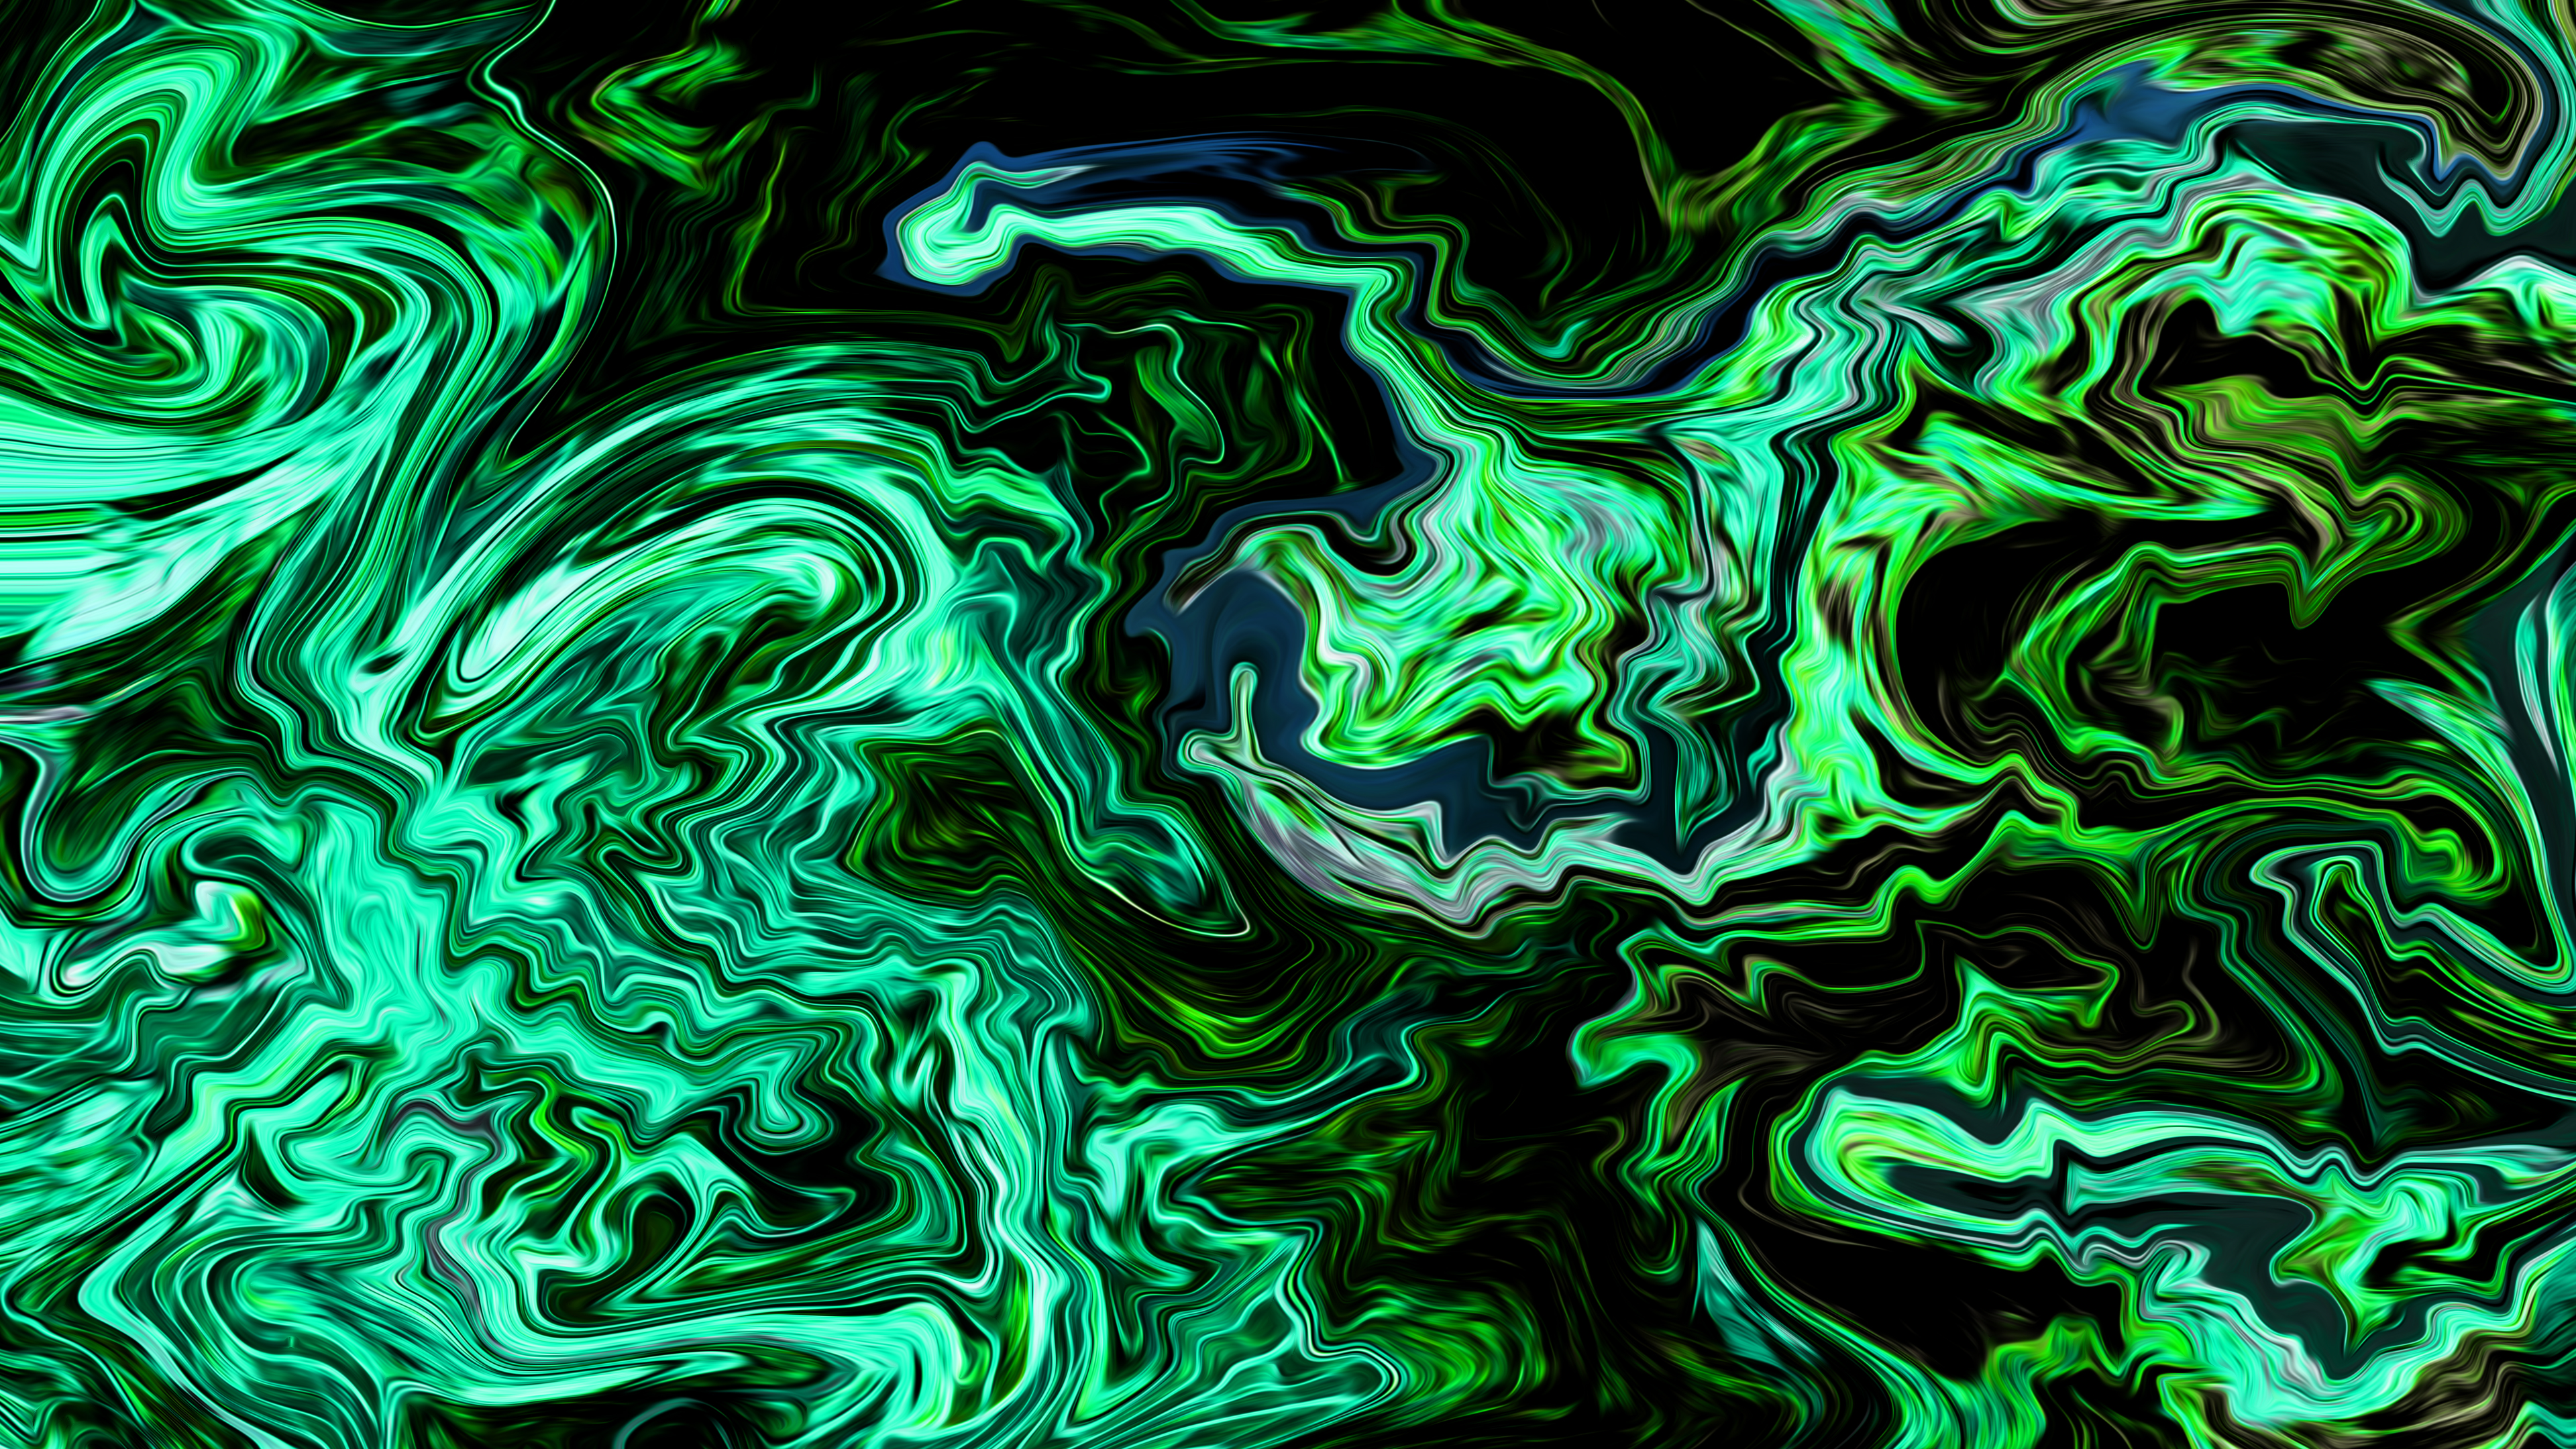 Abstract Fluid Liquid Illustration Graphic Design Artwork Digital Art Shapes Paint Brushes Oil Paint 3840x2160